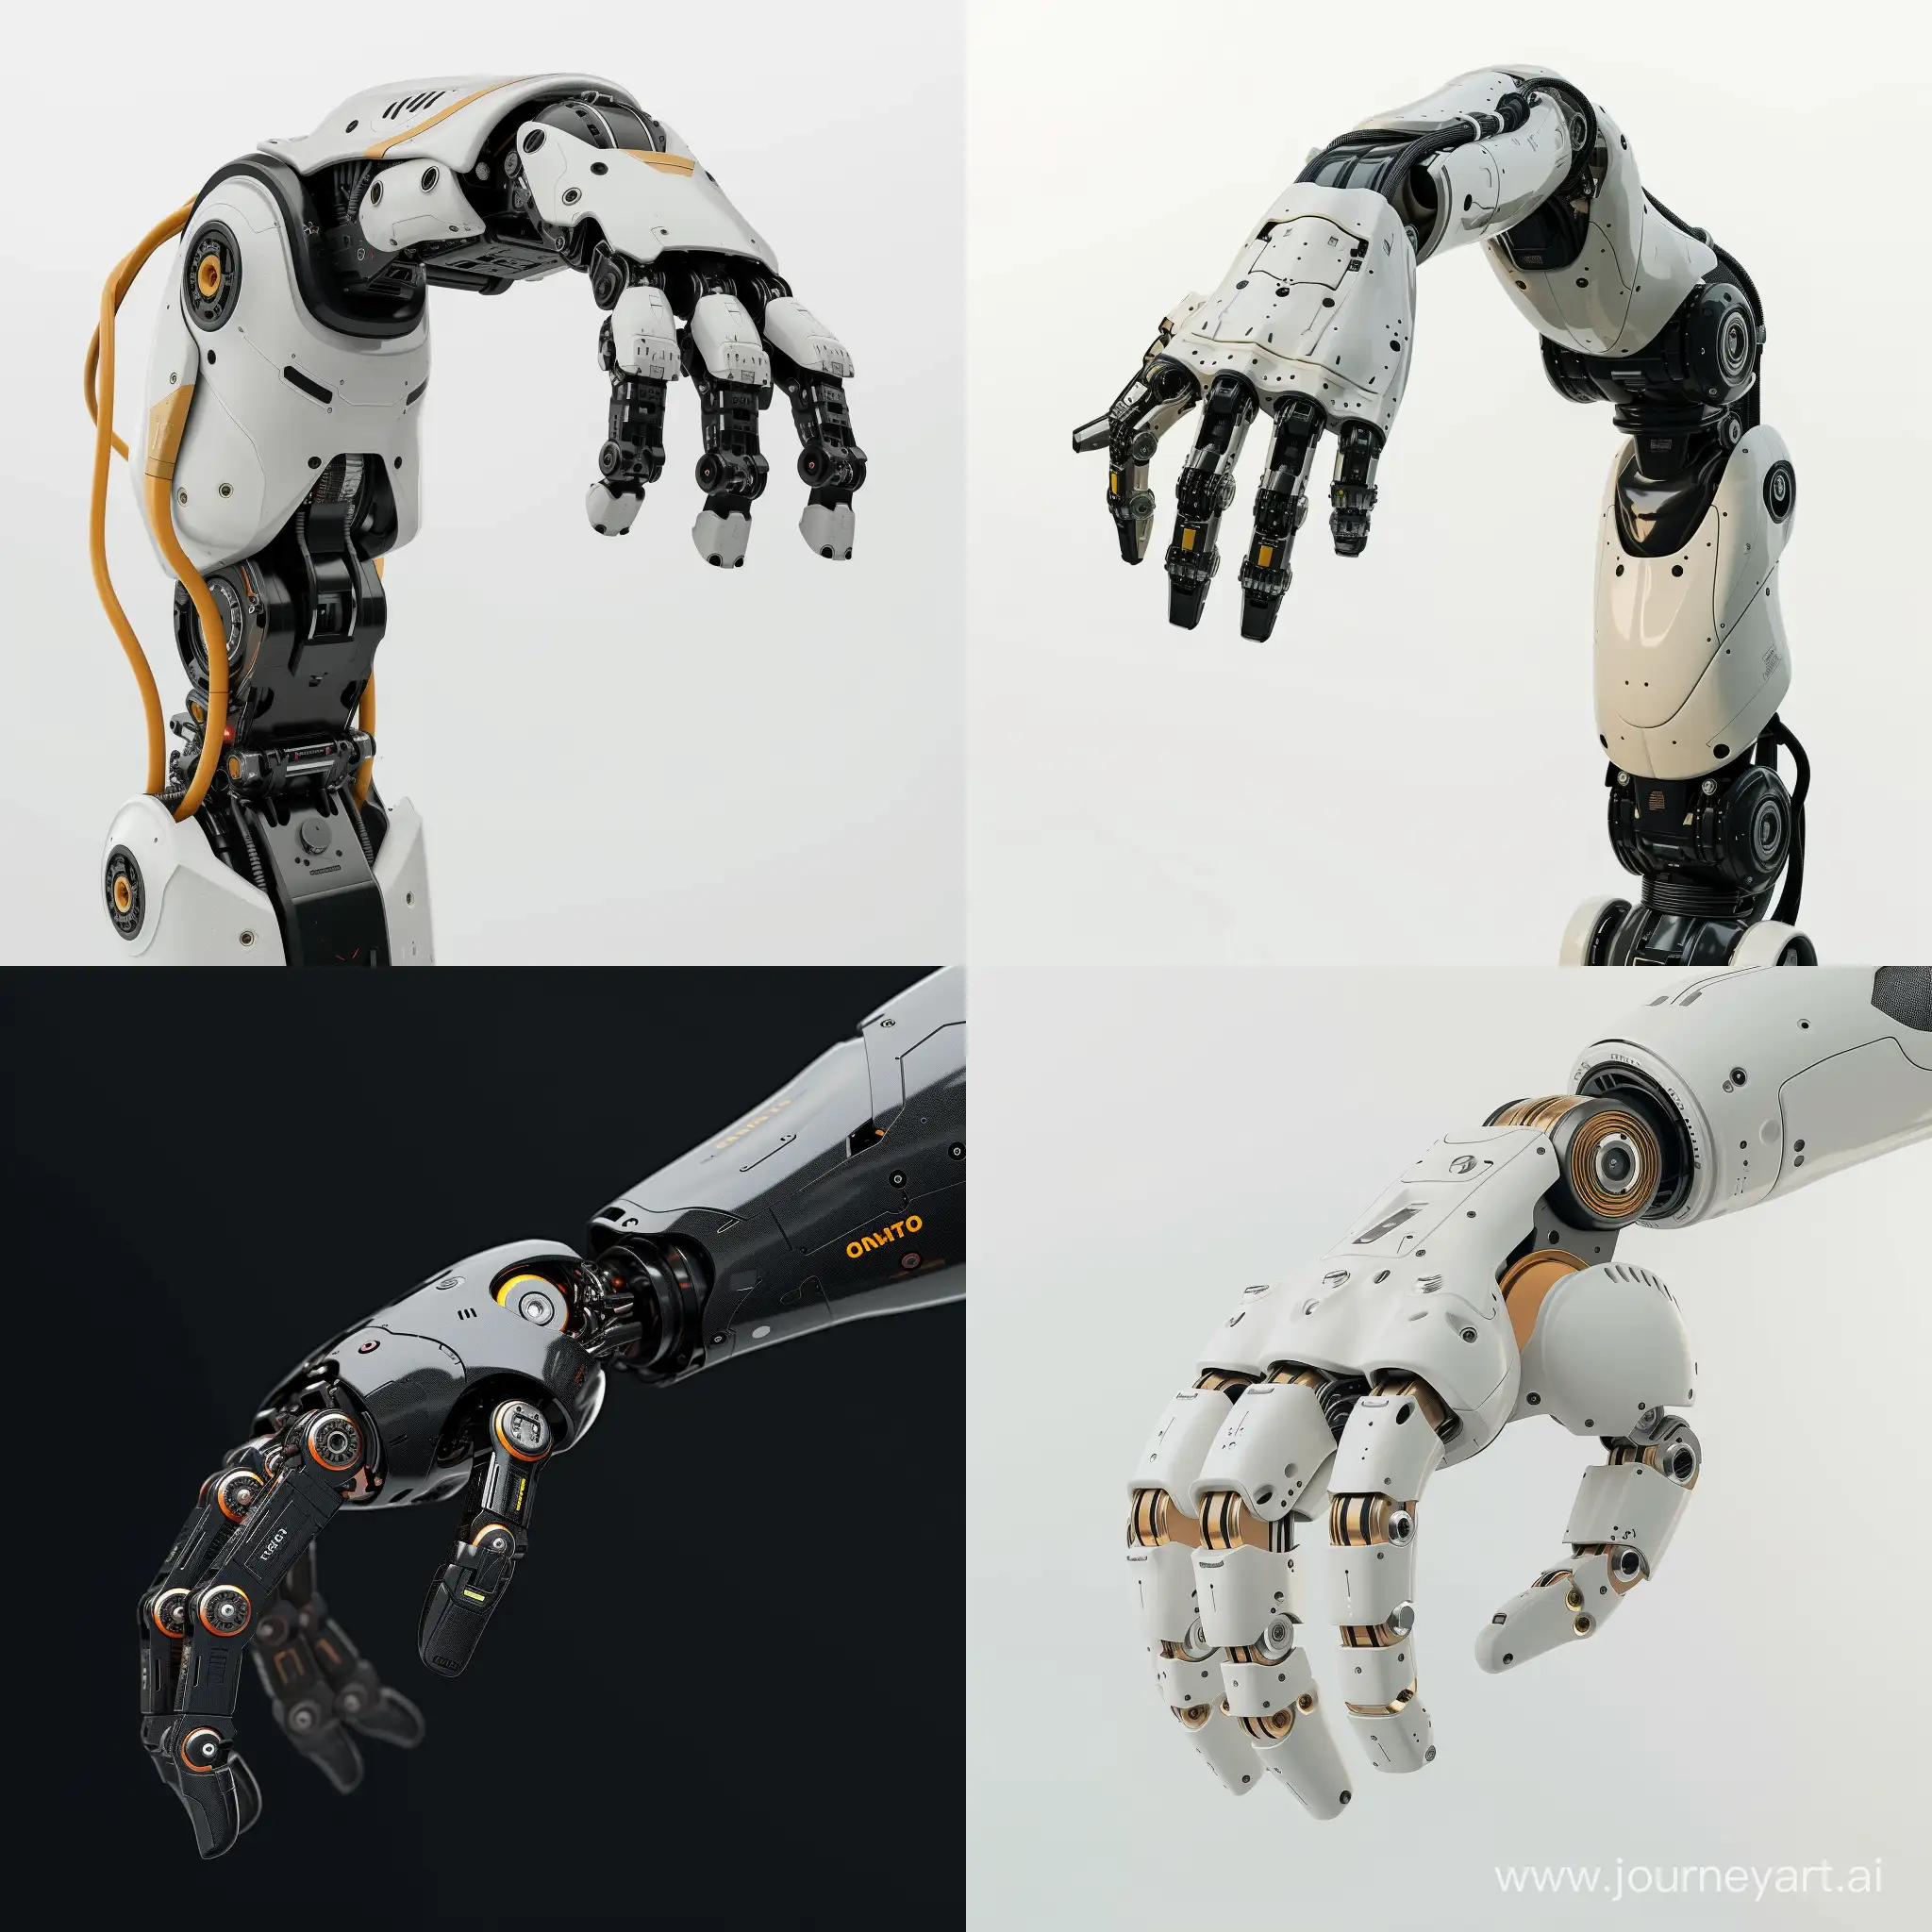 Precision-Industrial-Robot-Arm-Model-V6-in-a-11-Aspect-Ratio